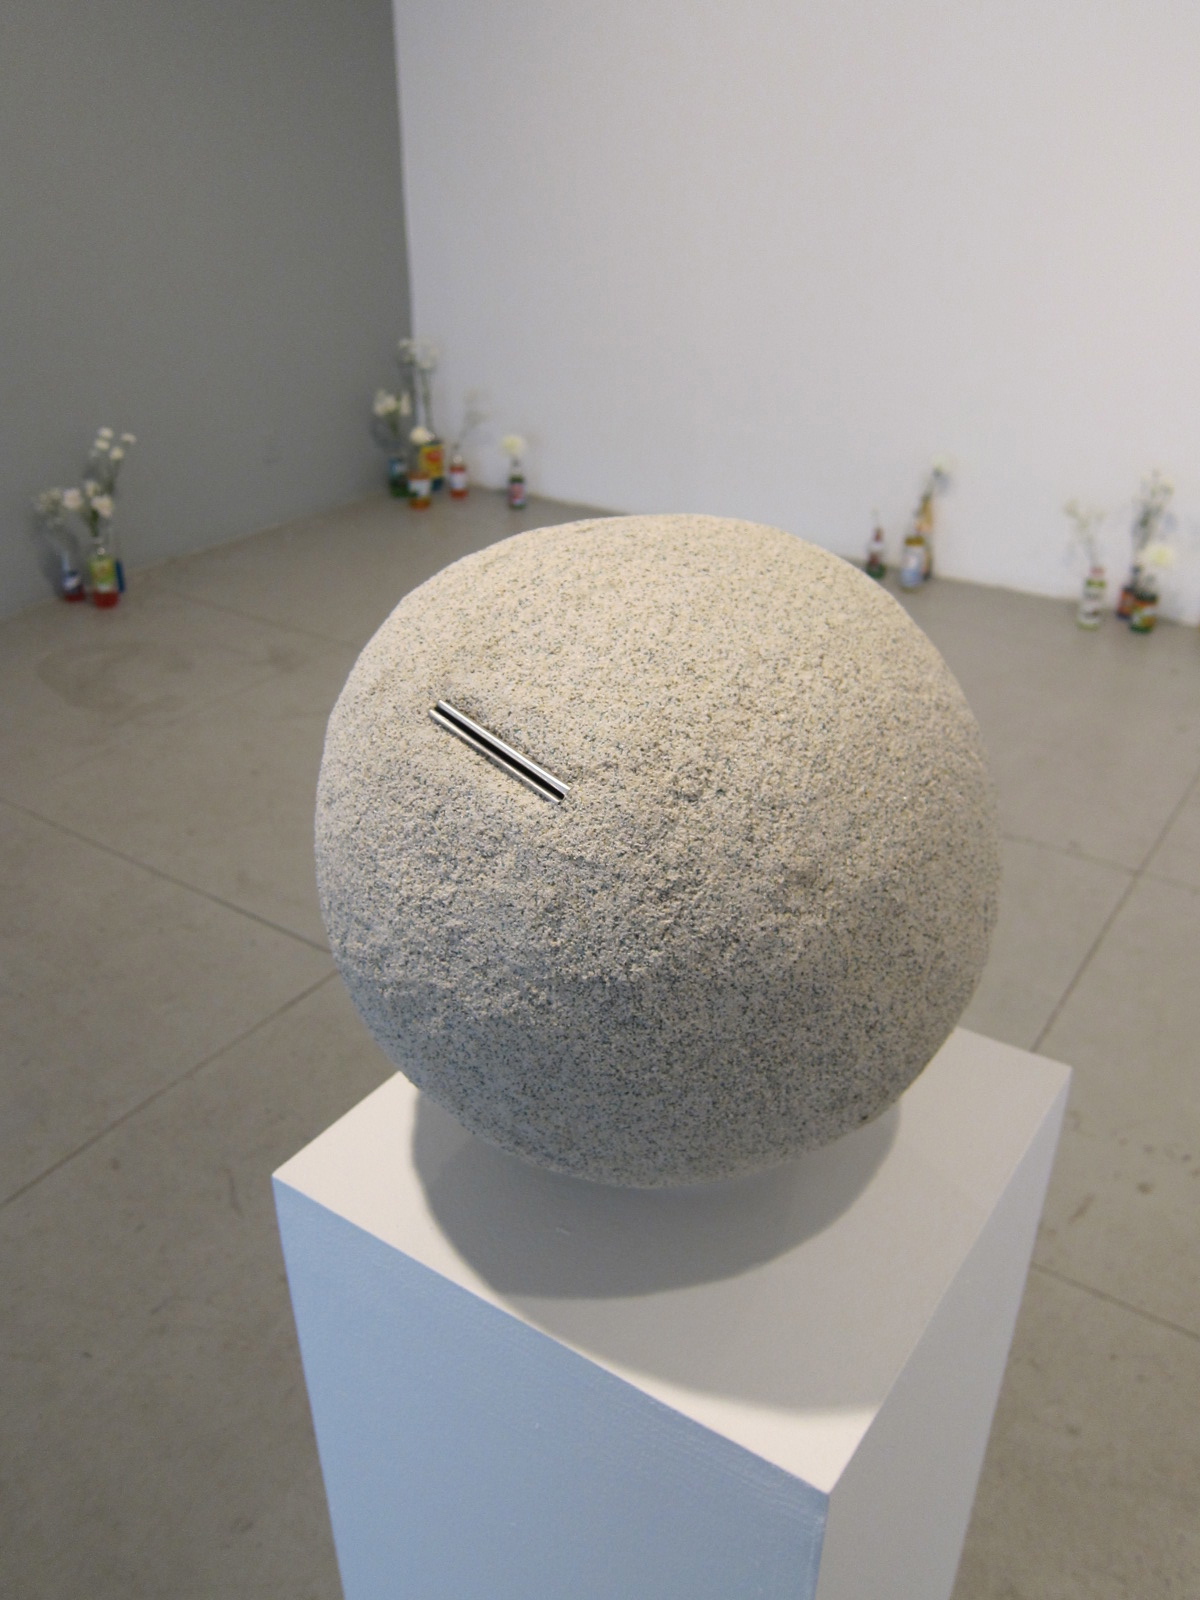   Rachel Higgins,   Deposit , 2013. Polystyrene, fiberglass, cement, Cerastone, aluminum, and unknown items deposited by viewers.     